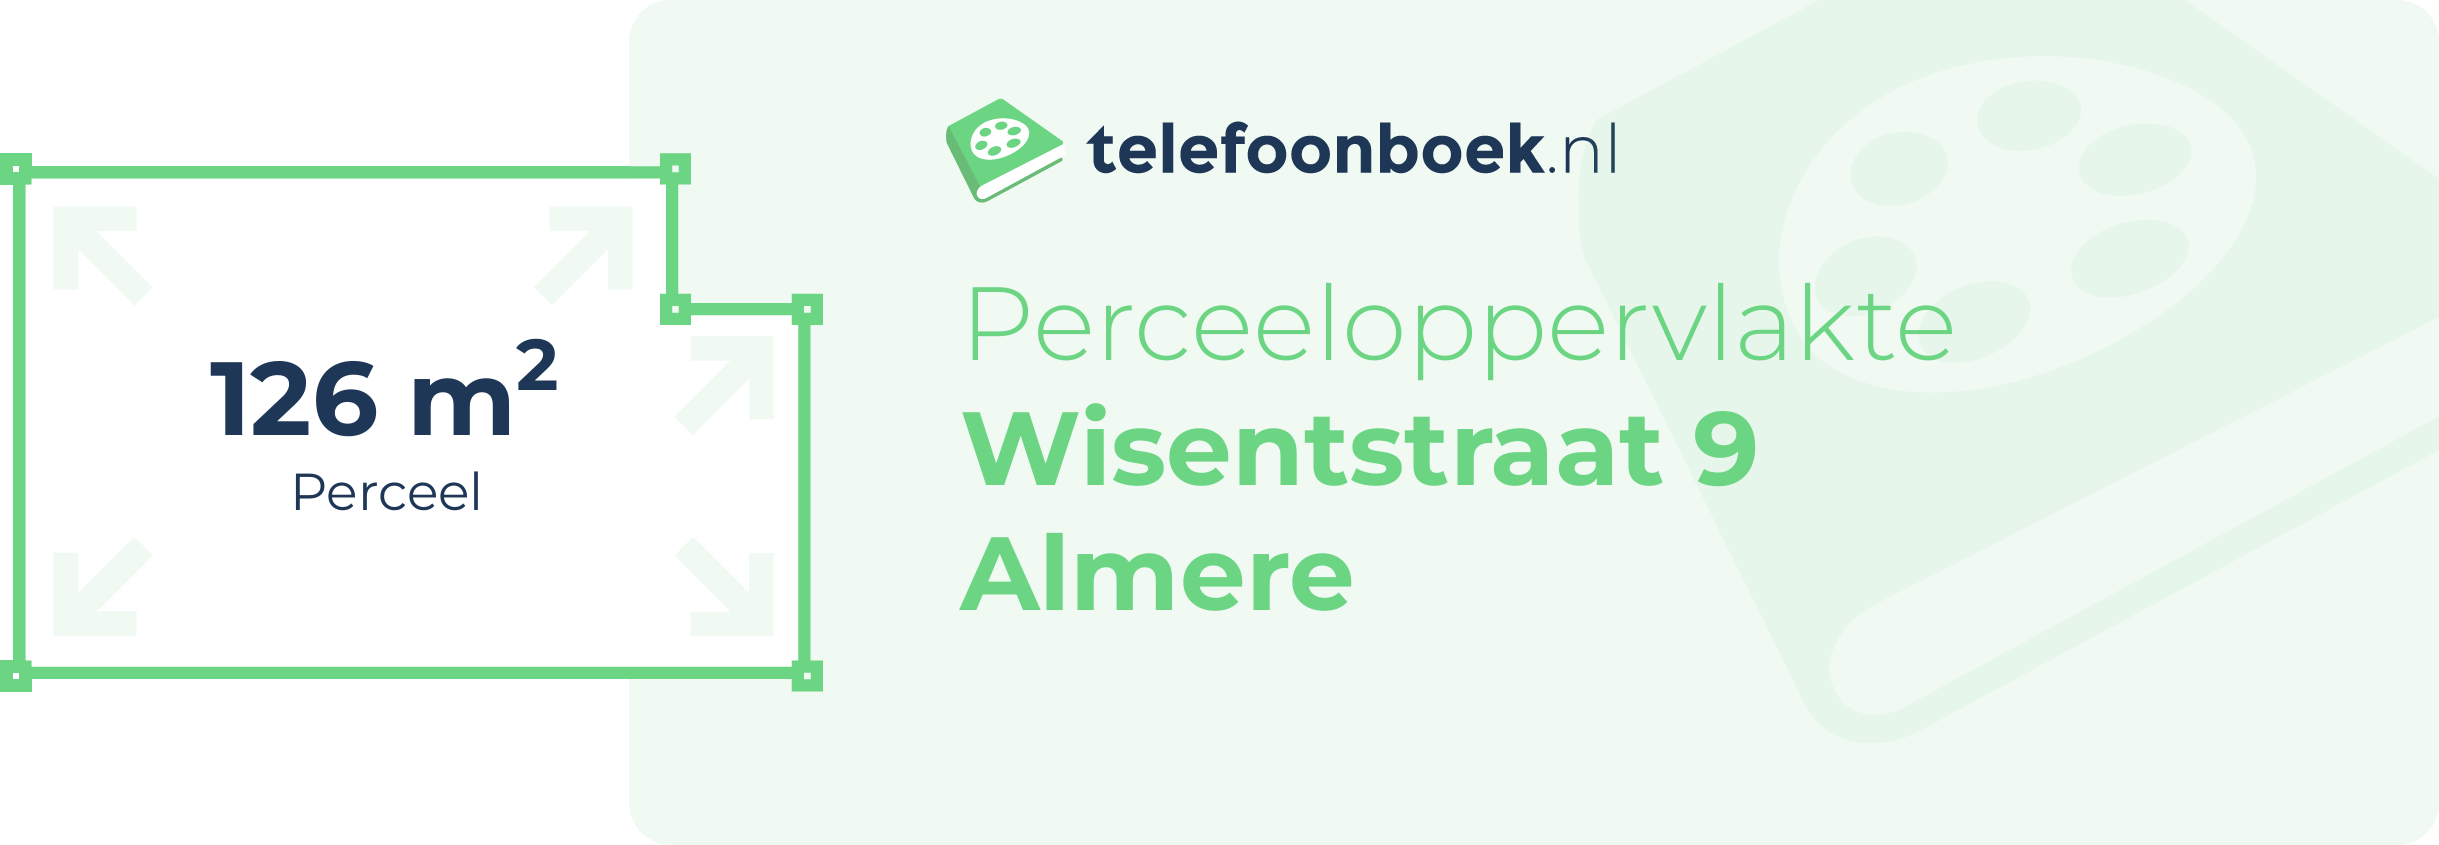 Perceeloppervlakte Wisentstraat 9 Almere